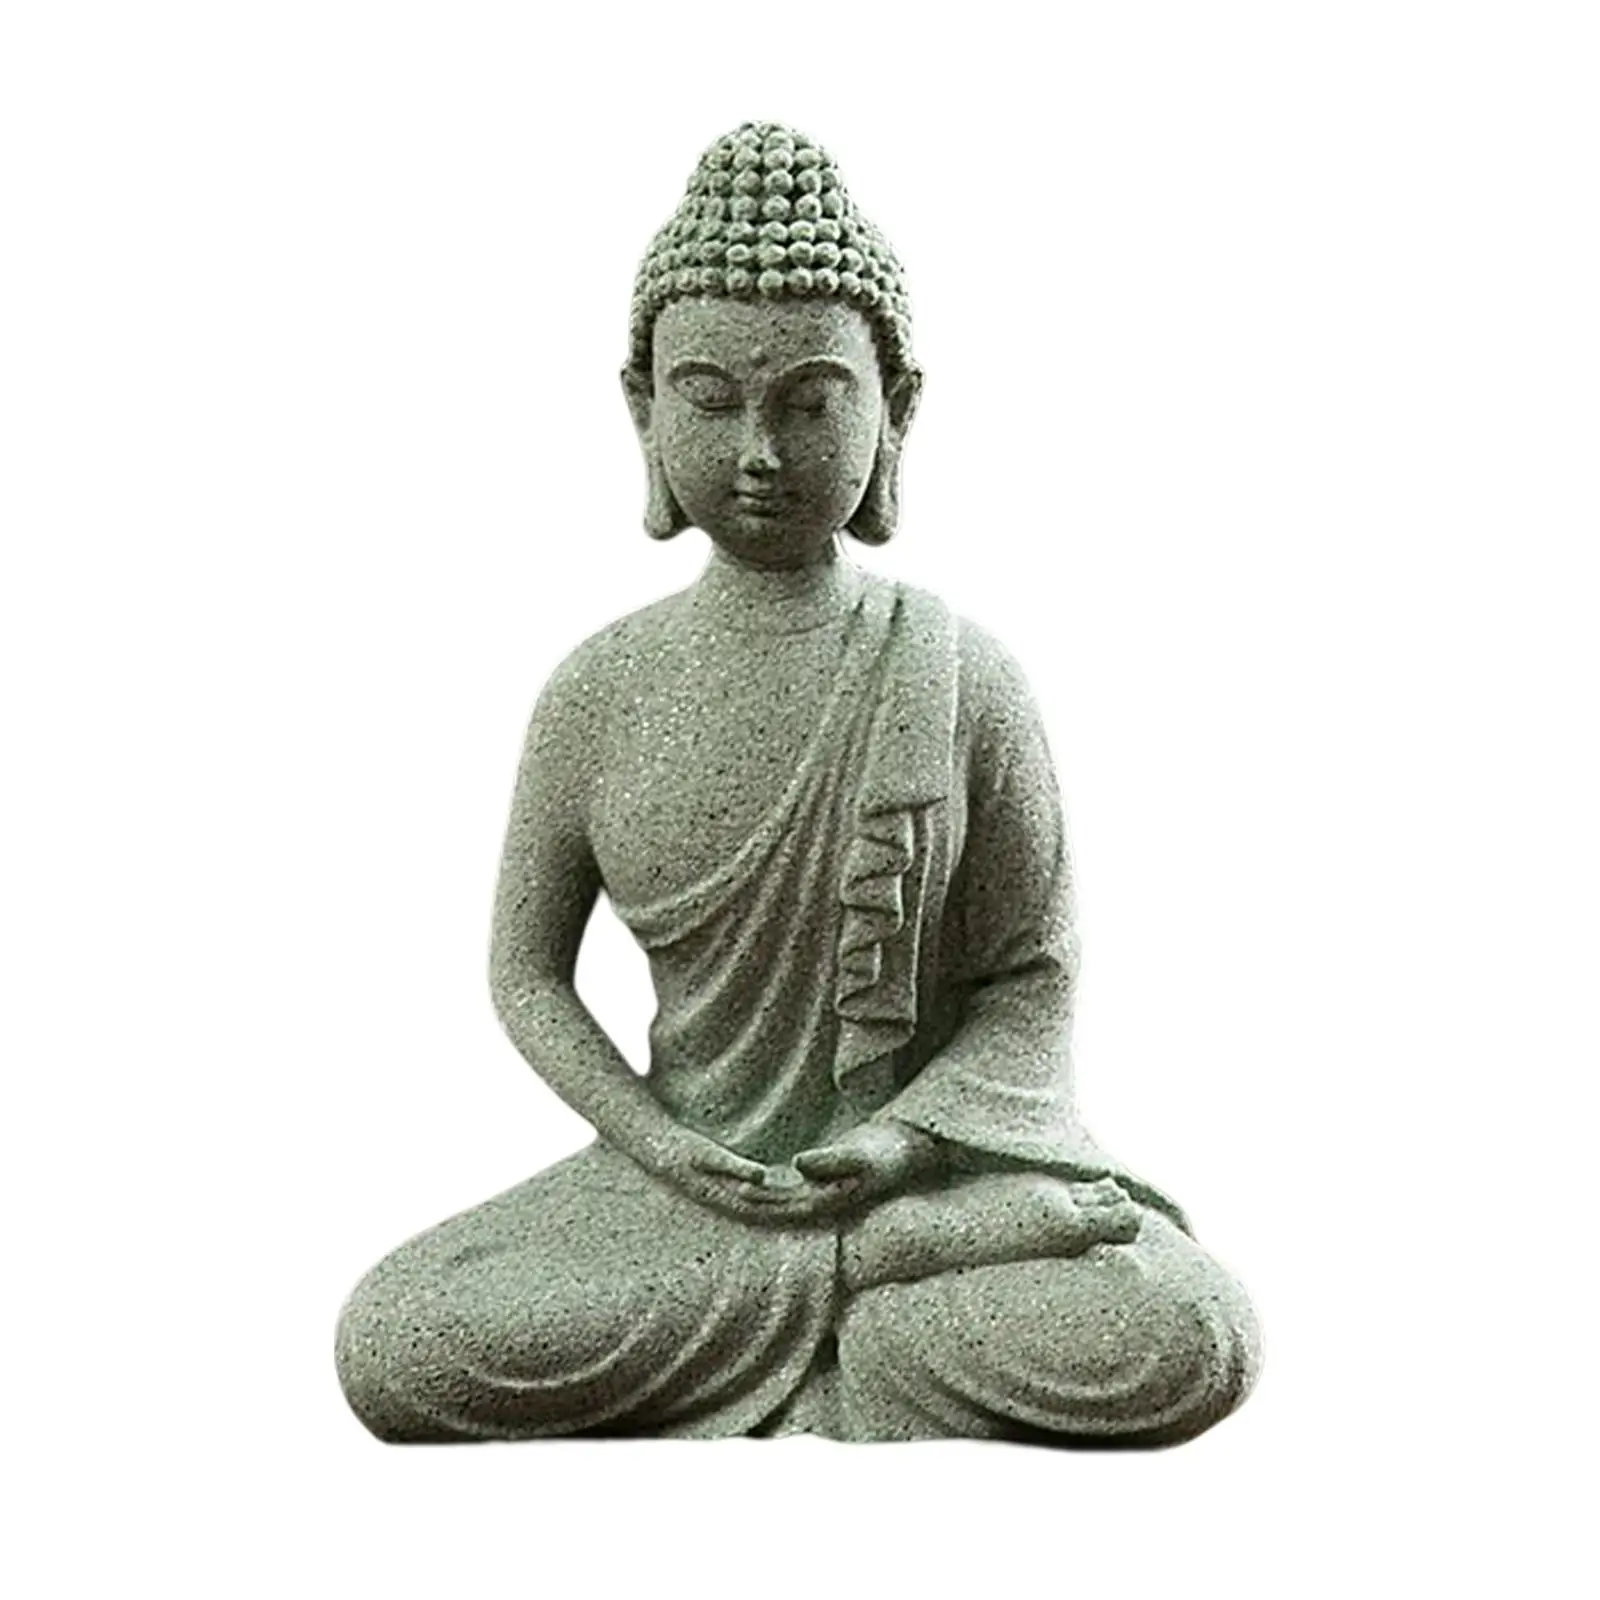 Sitting Buddha Statue Figurine, Gift Decorative zen Figurines Buddhism Decor